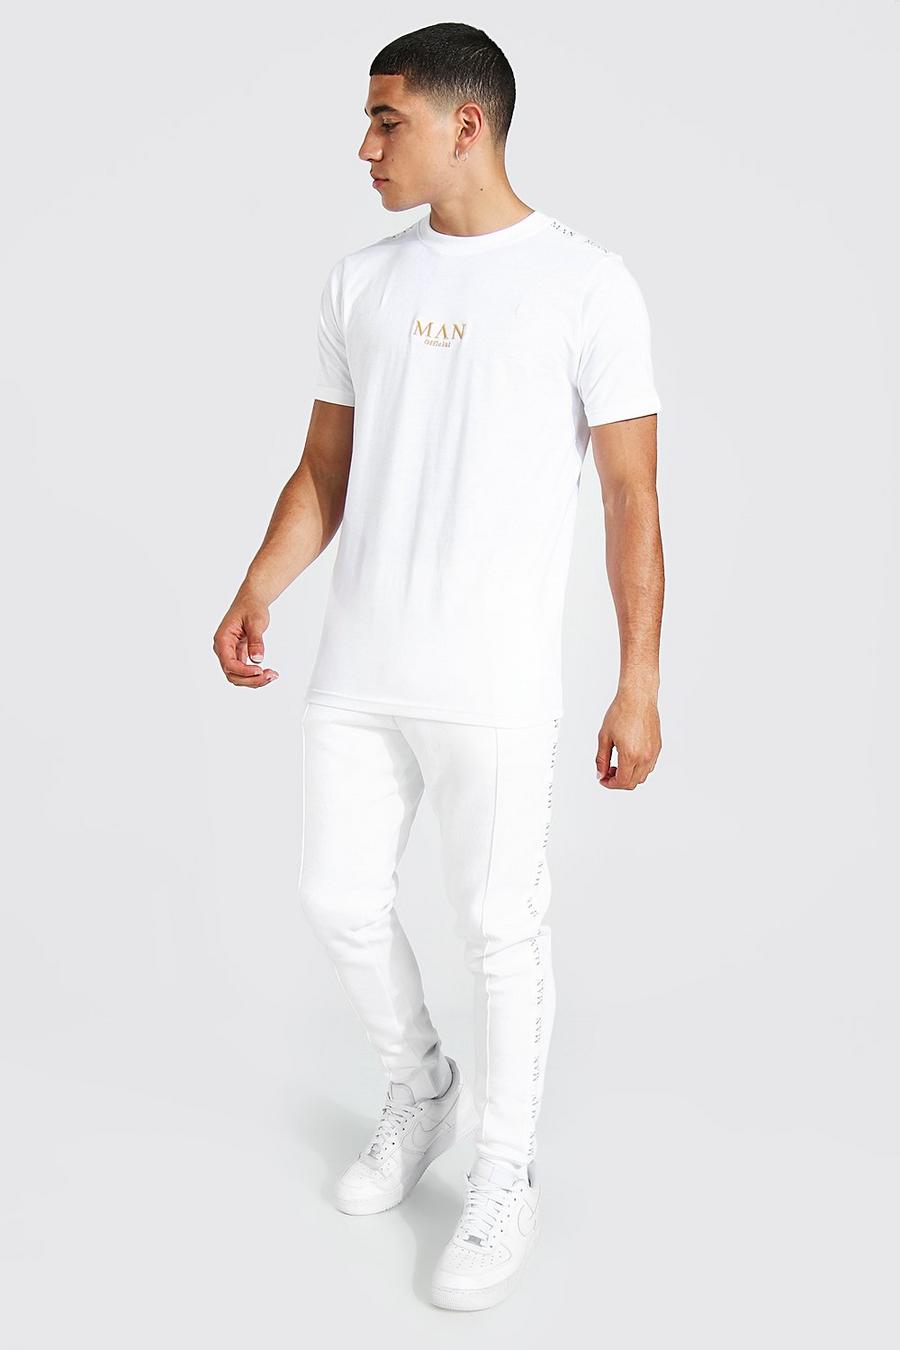 Man Gold T-Shirt und Jogginghose, White image number 1